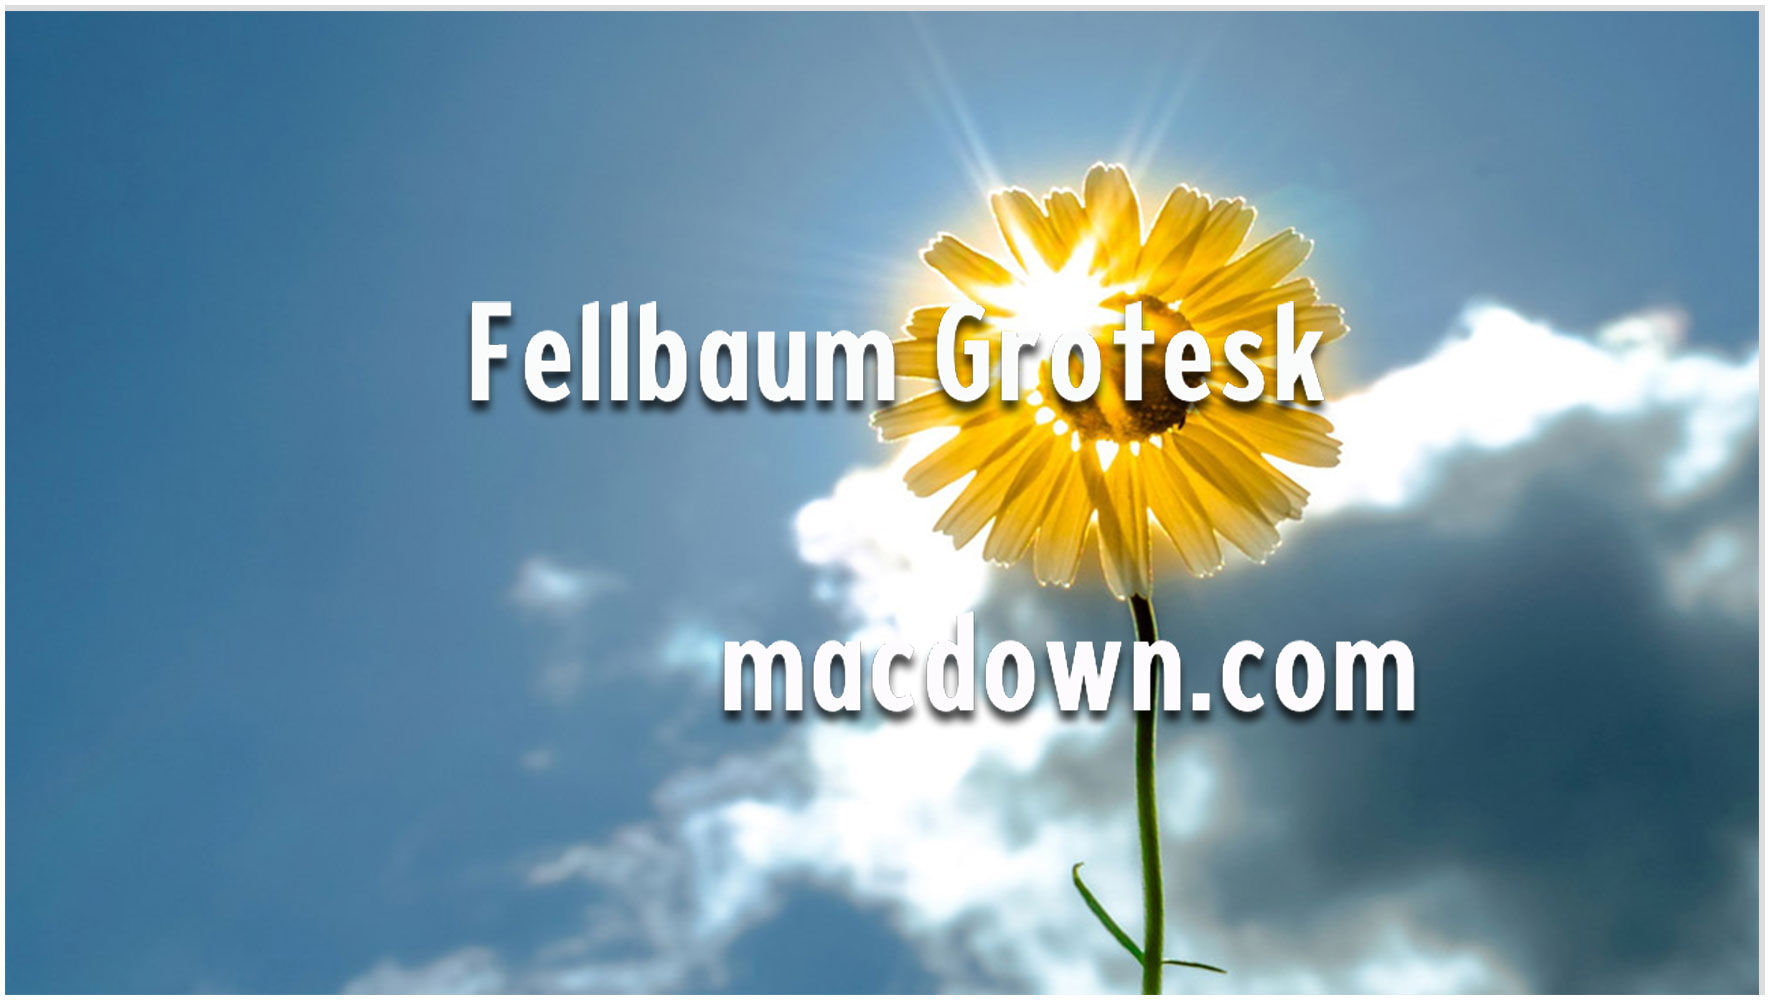 Fellbaum Grotesk精简复古设计字体 for mac